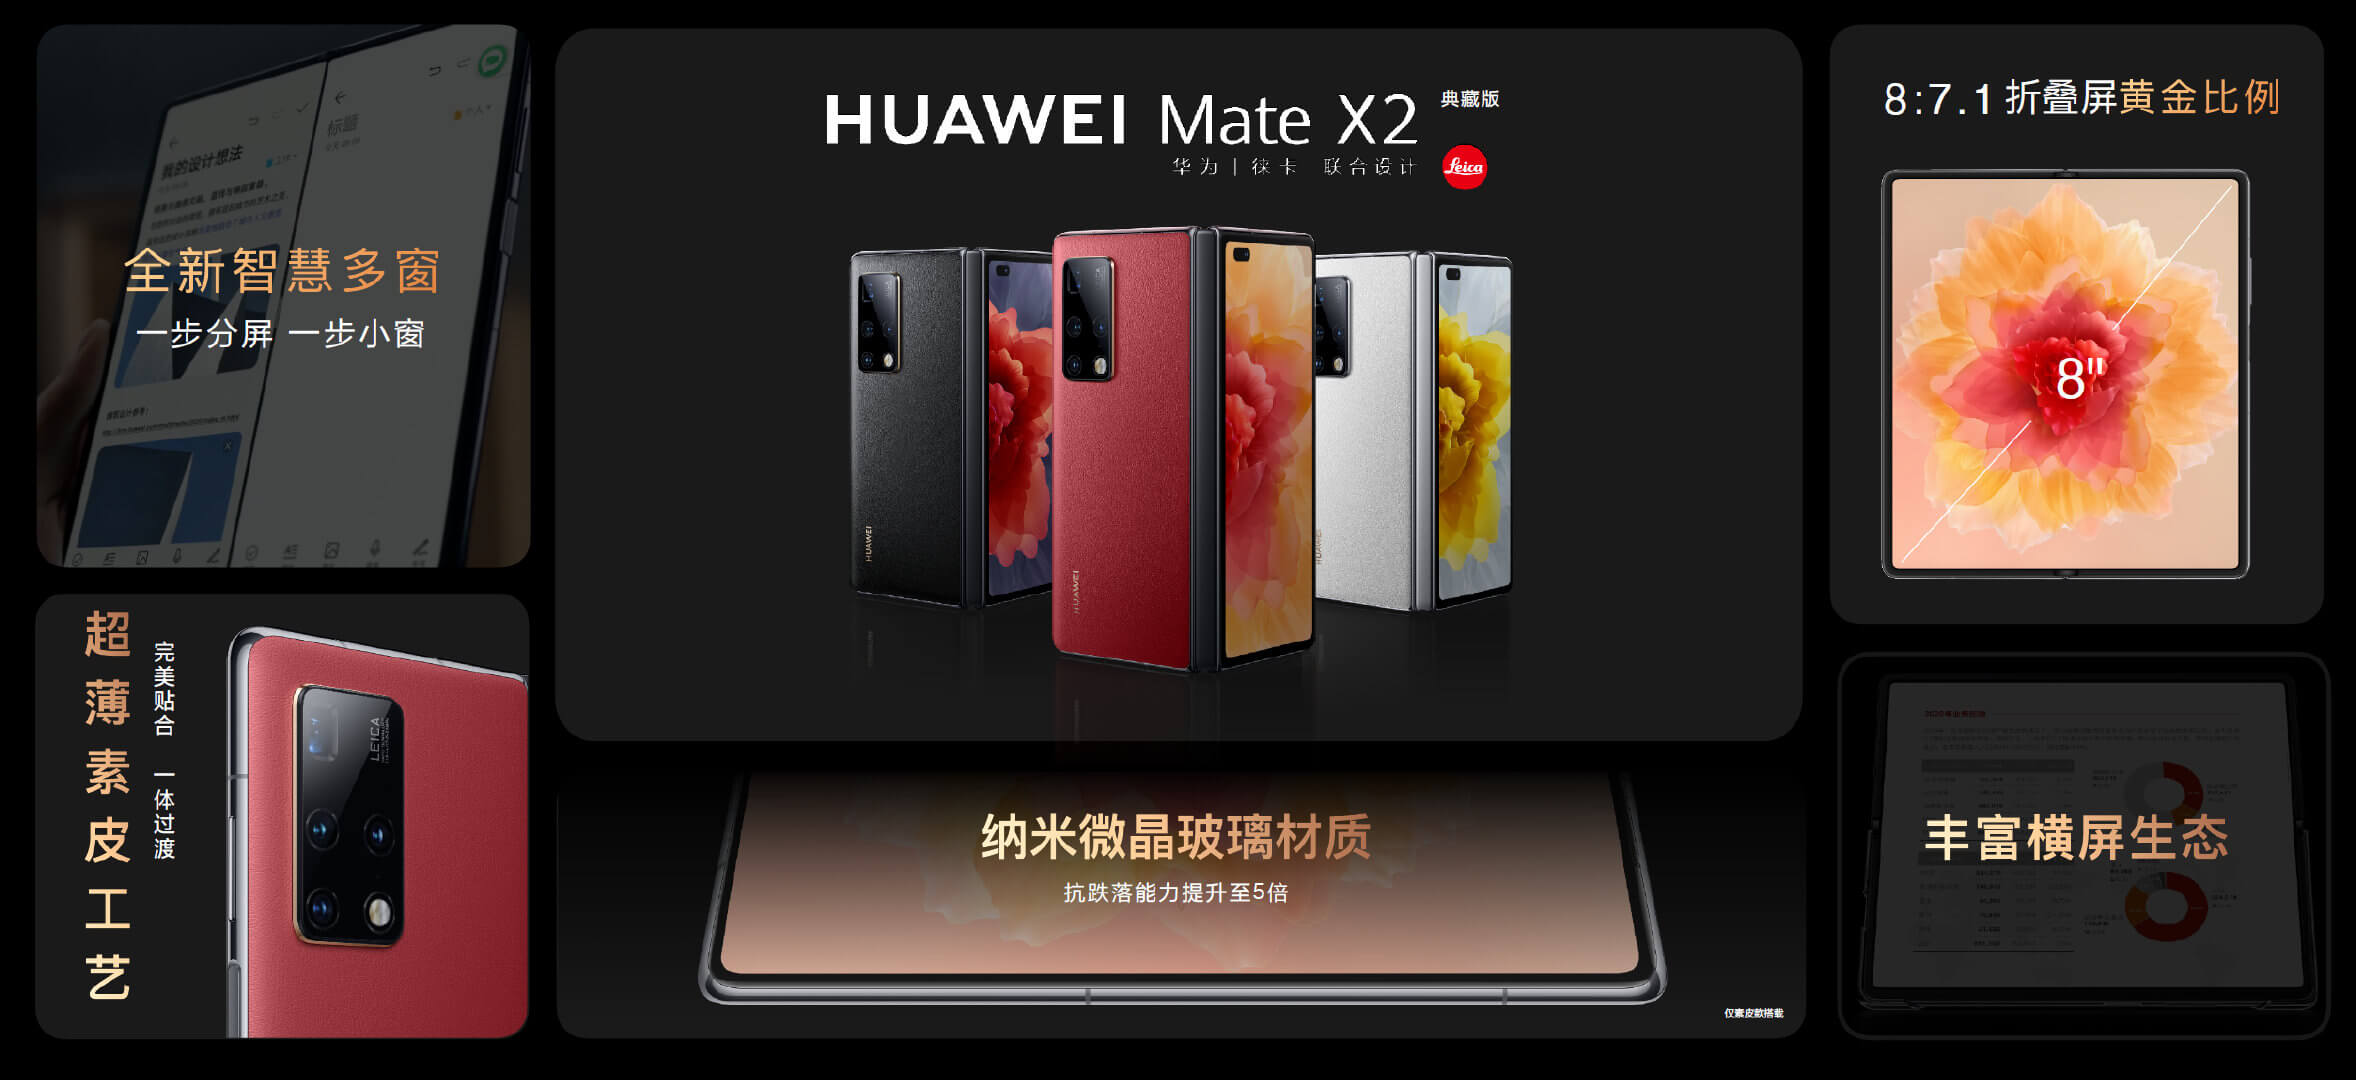 Huawei Mate X2 коллекционное издание